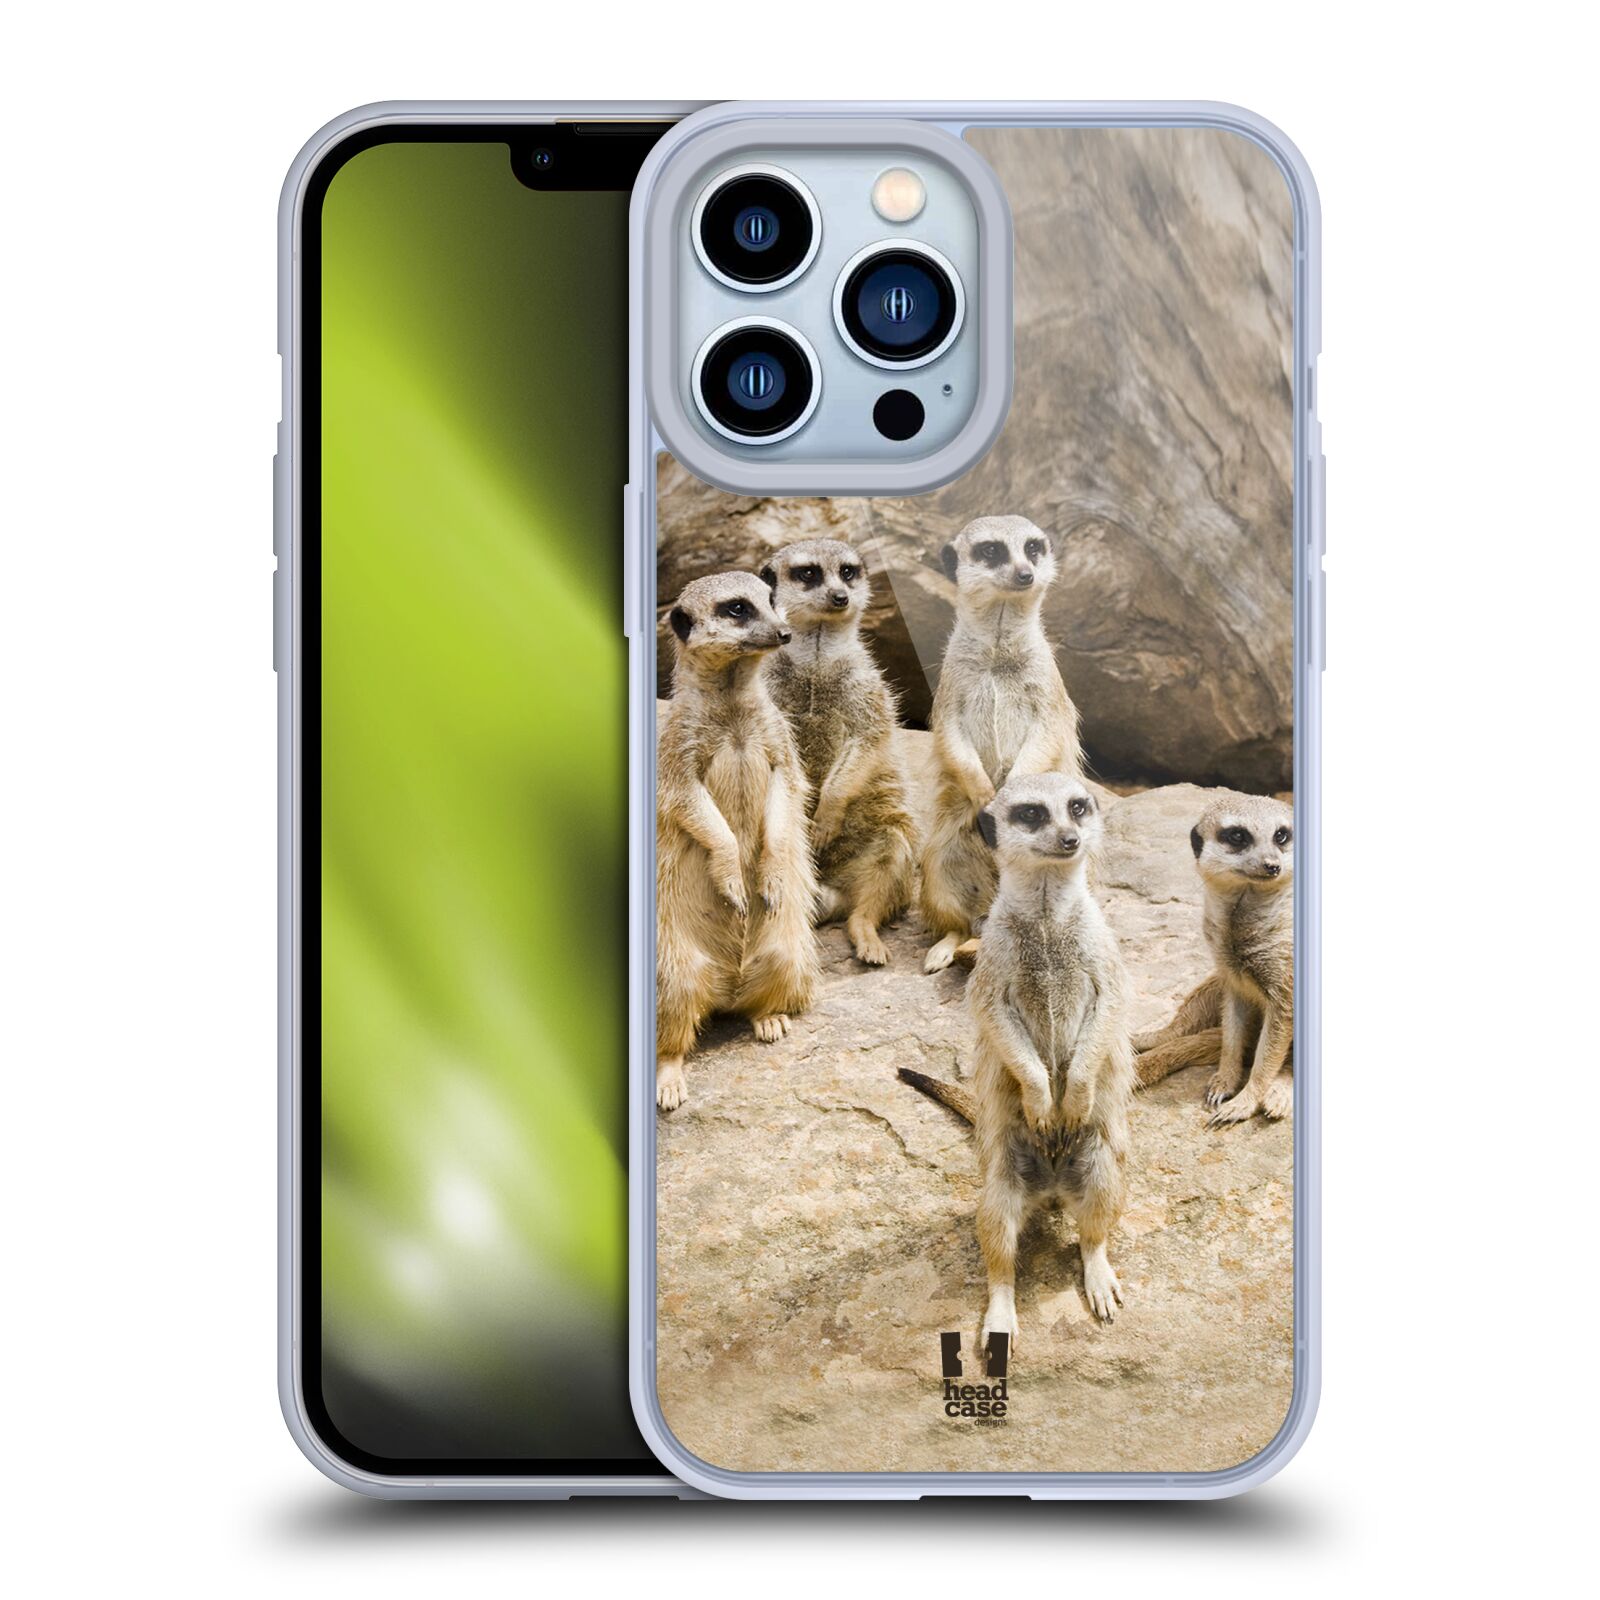 Plastový obal HEAD CASE na mobil Apple Iphone 13 PRO MAX vzor Divočina, Divoký život a zvířata foto SURIKATA